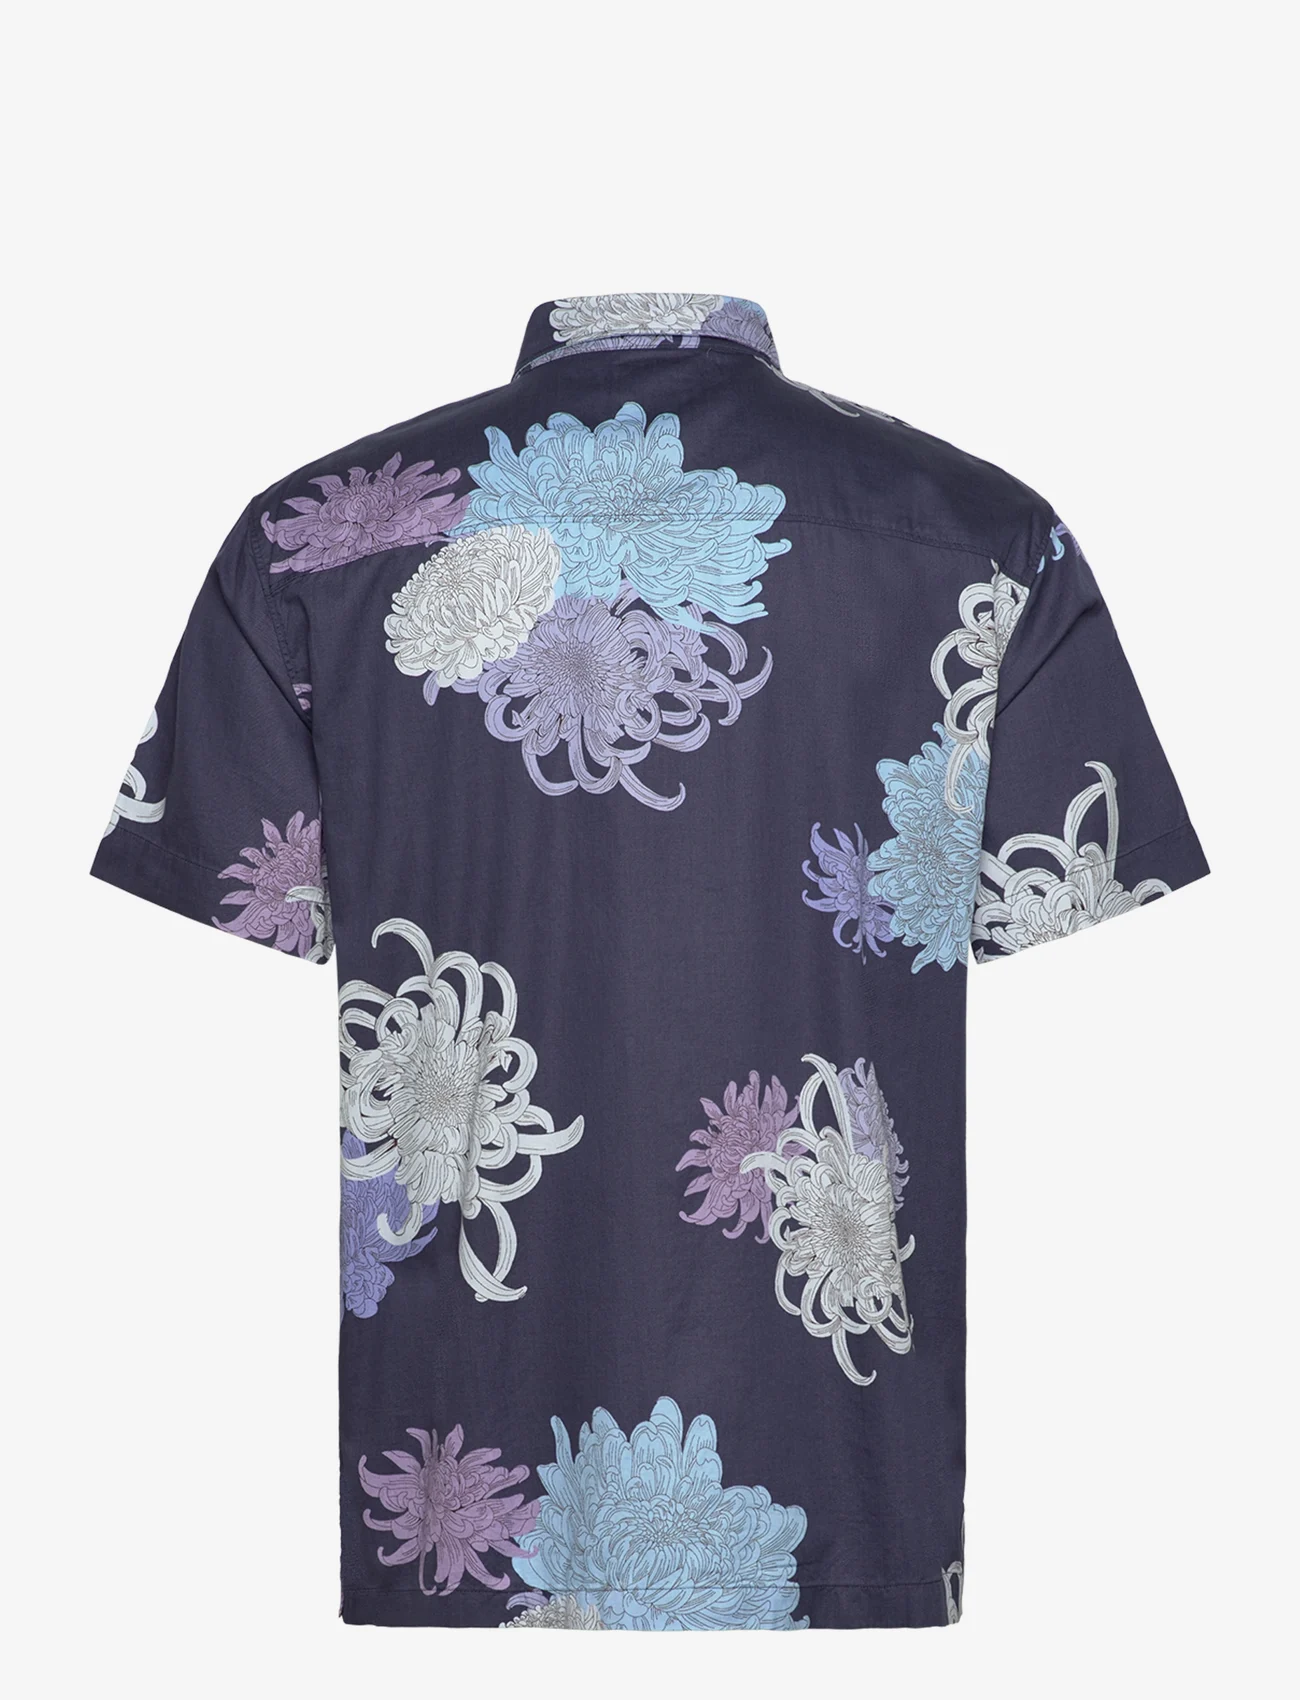 Superdry - HAWAIIAN SHIRT - kortärmade t-shirts - chrysanthemum navy - 1